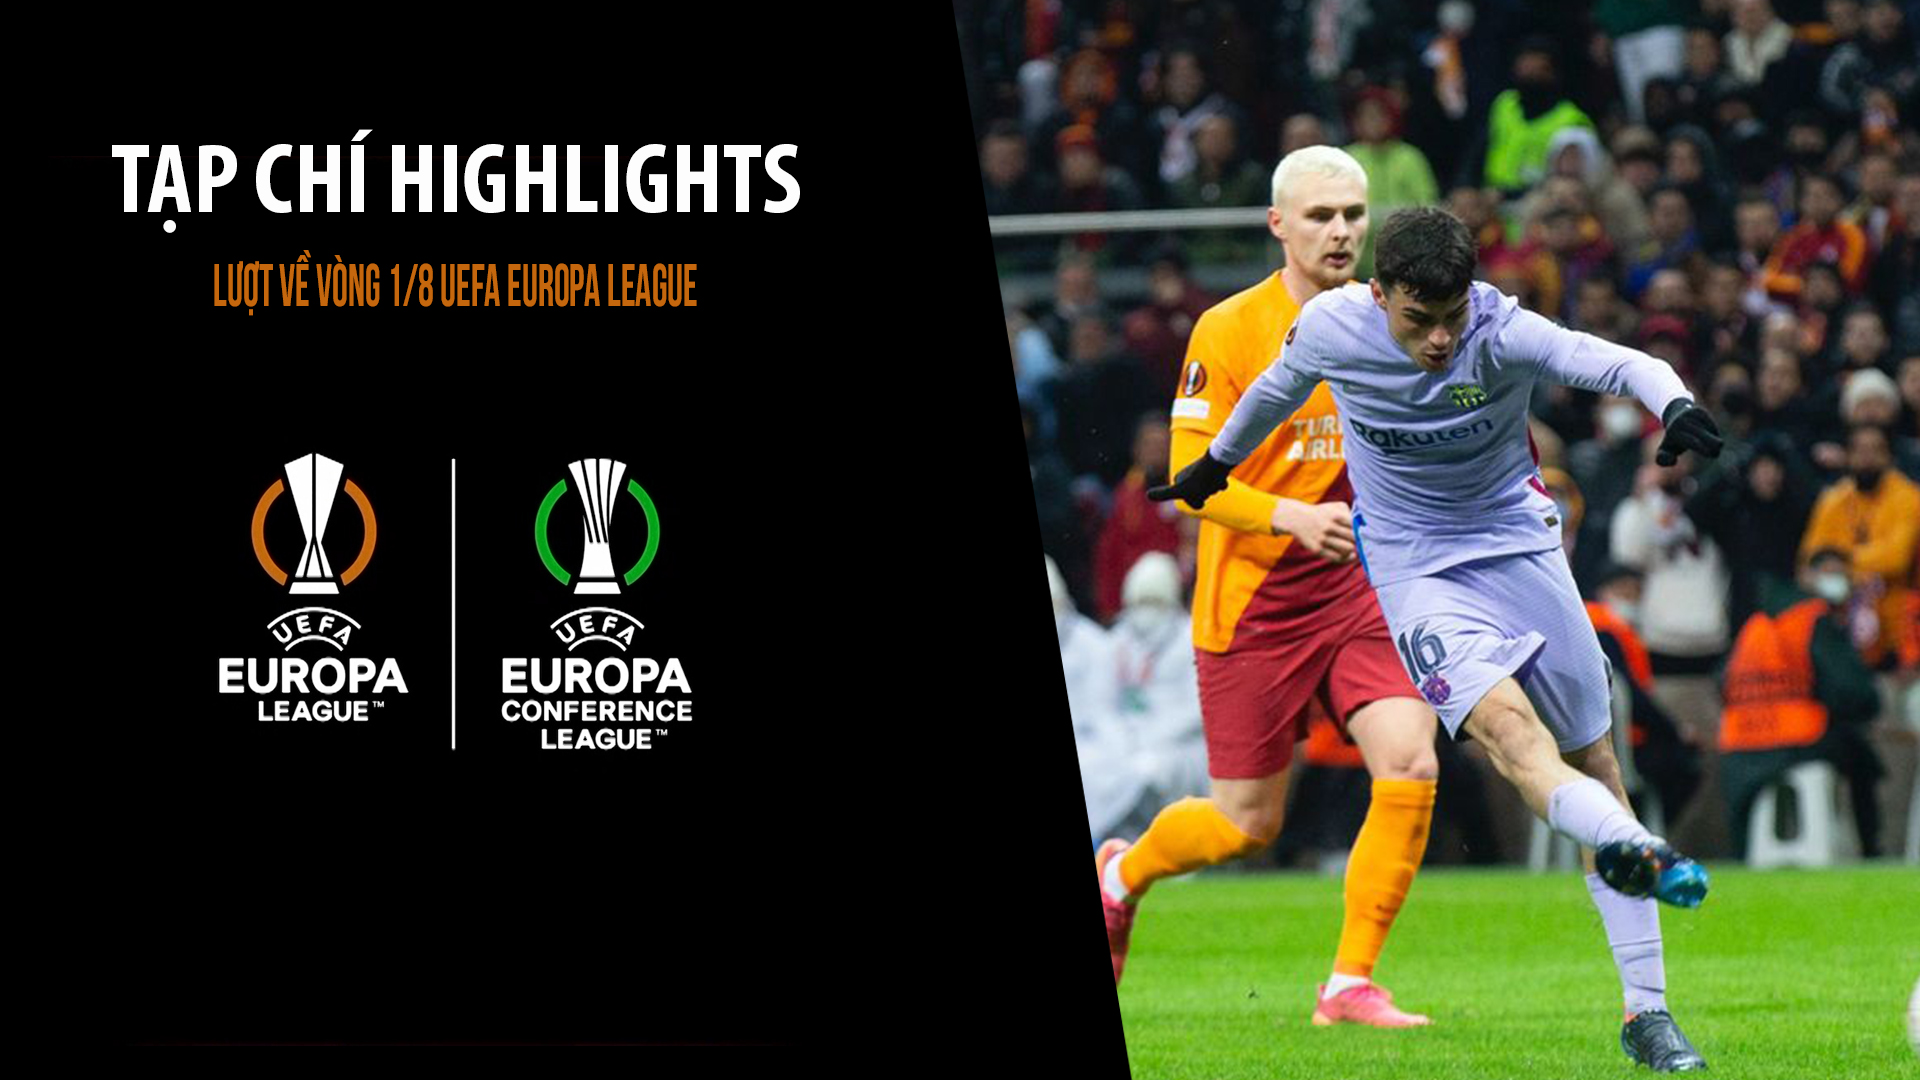 Highlights show lượt về vòng 1/8 Europa League - Tạp chí UEFA Europa League